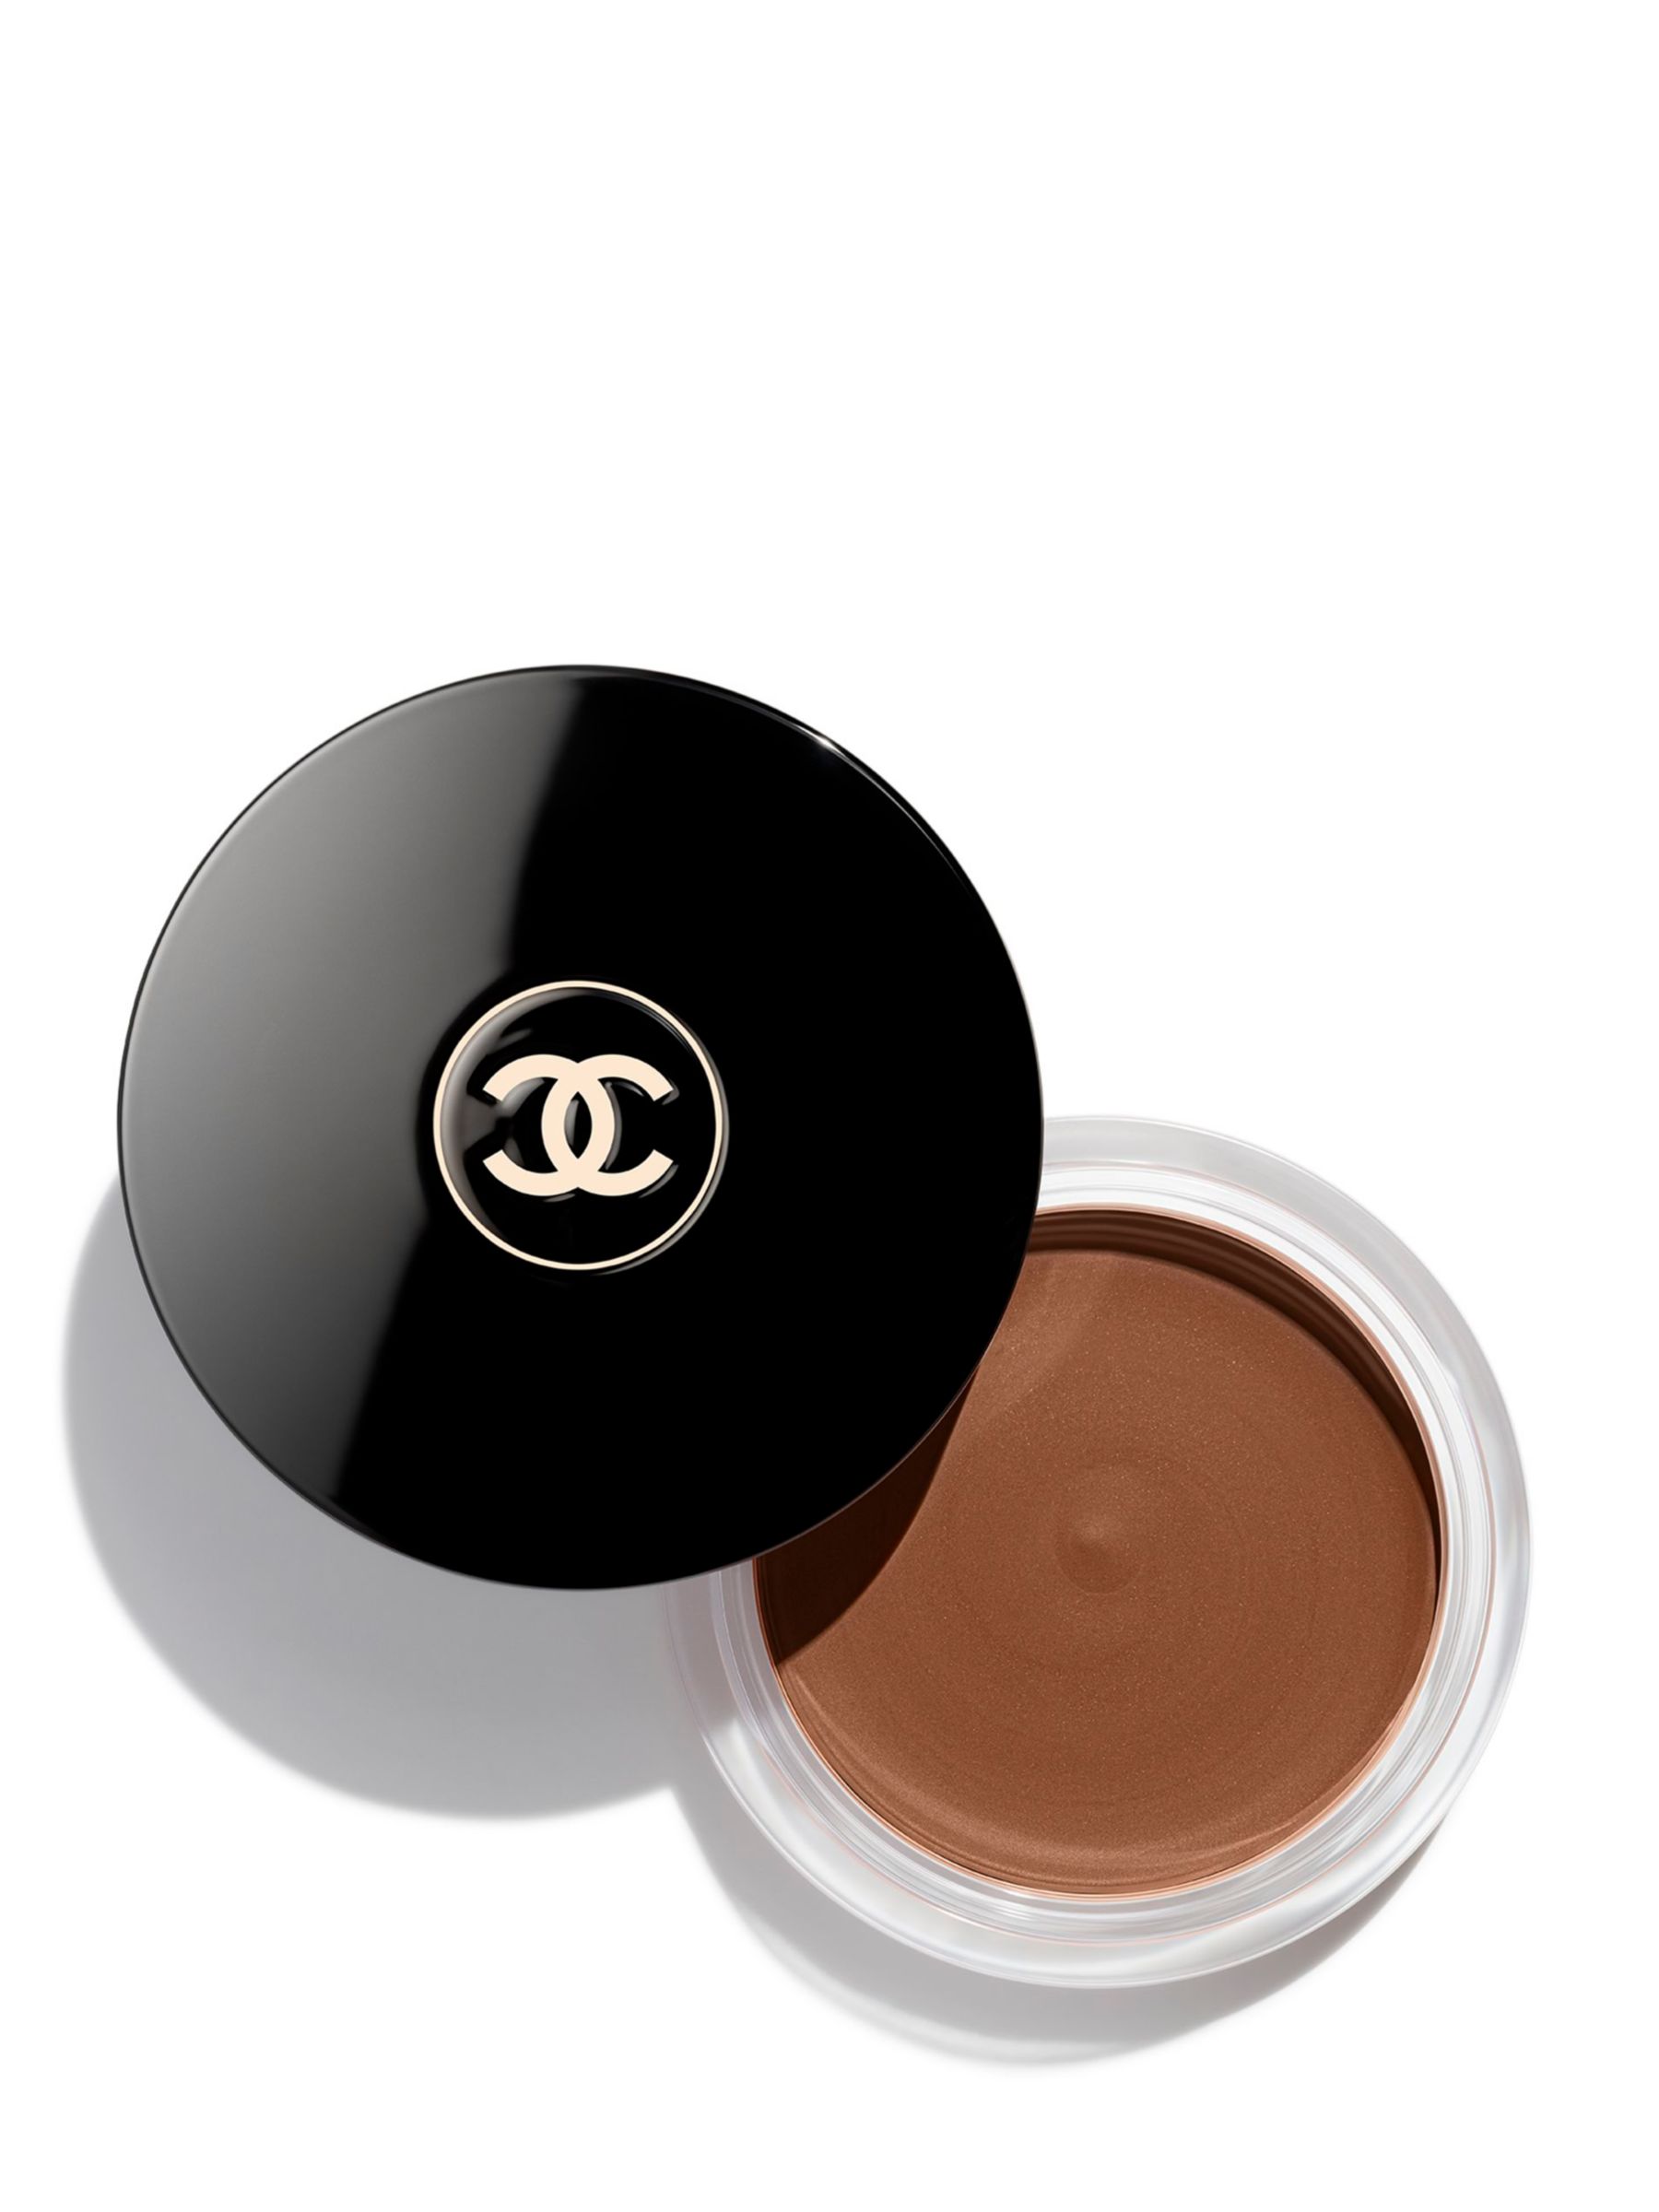 Chanel Les Beiges Healthy Glow Bronzing Cream 395 Soleil Tan Deep Bronze  1.0 Ounce